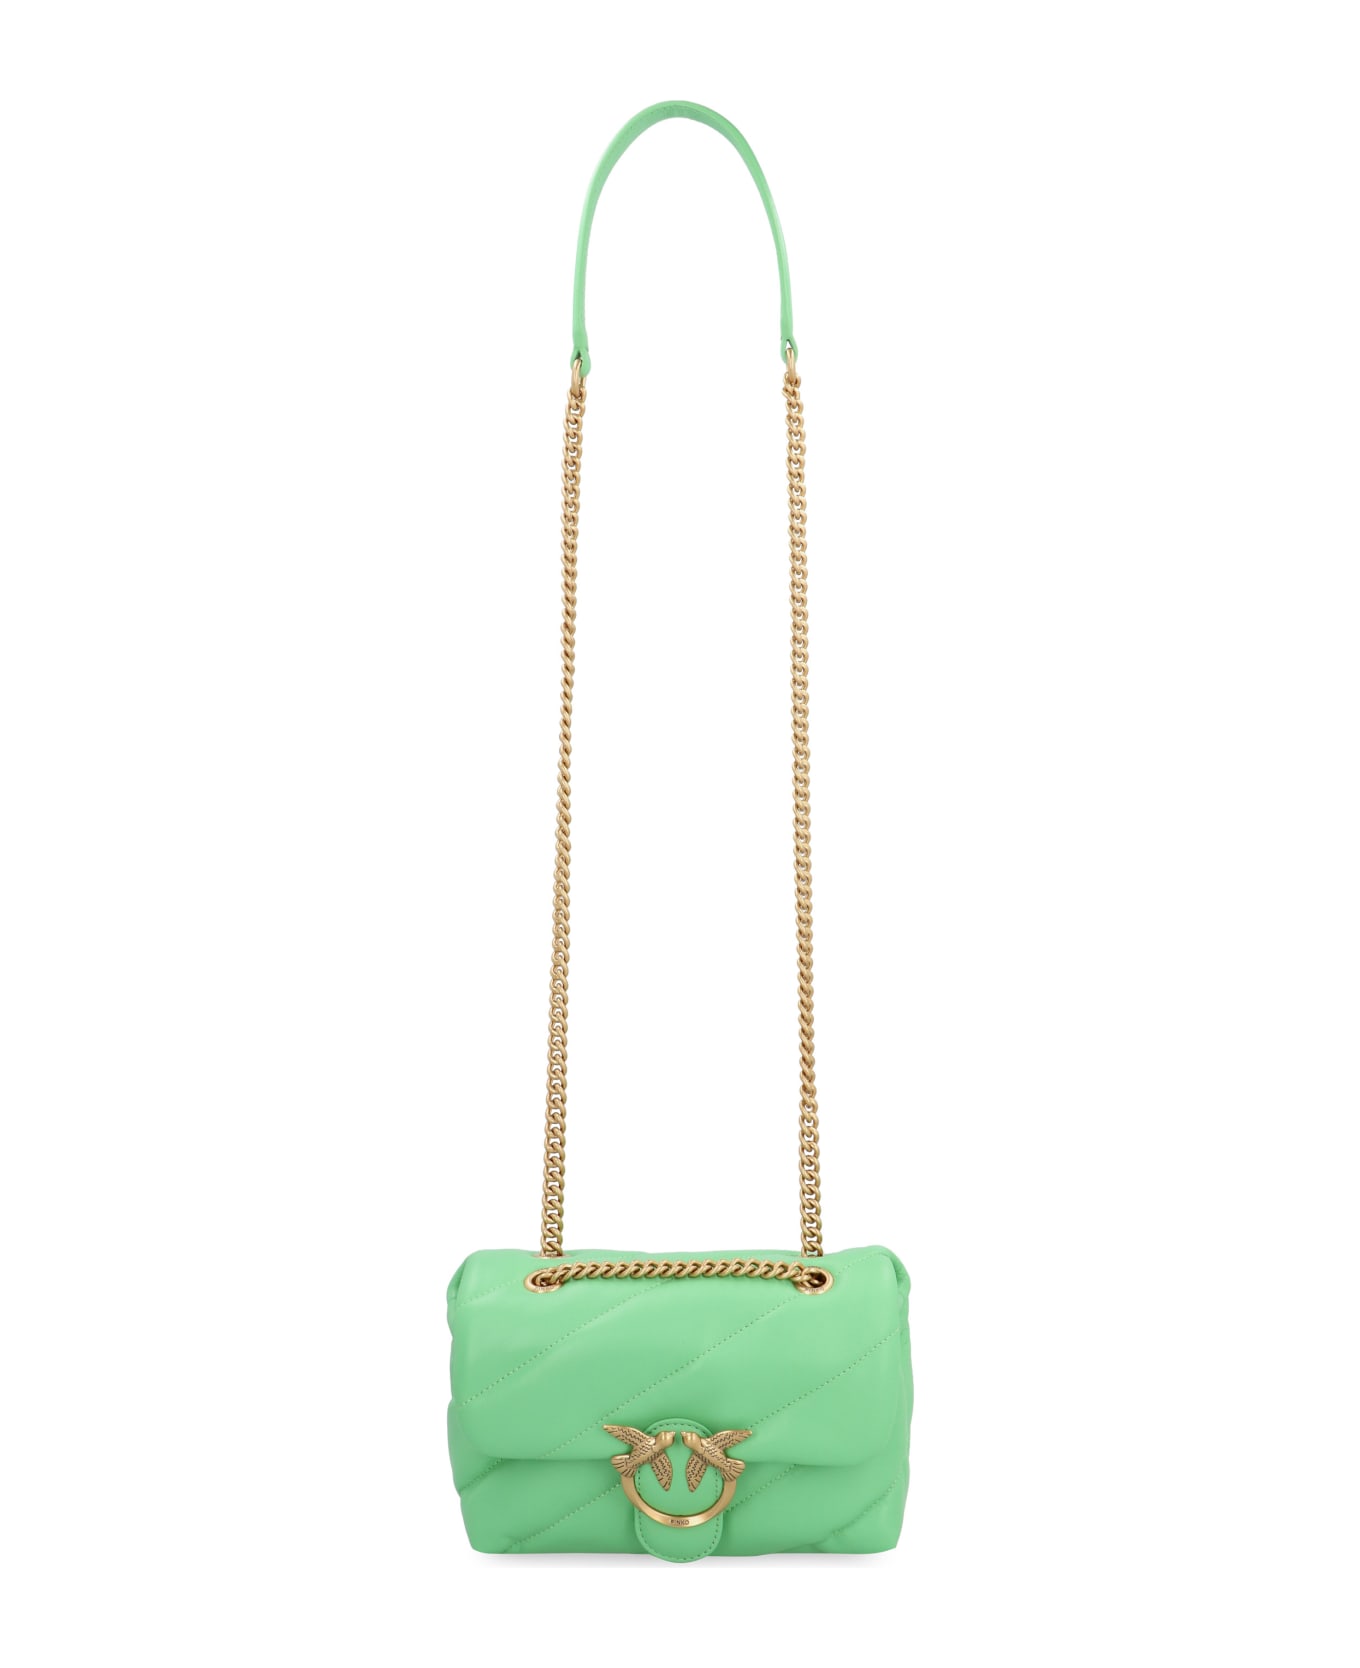 Pinko Love Mini Puff Leather Crossbody Bag - green ショルダーバッグ